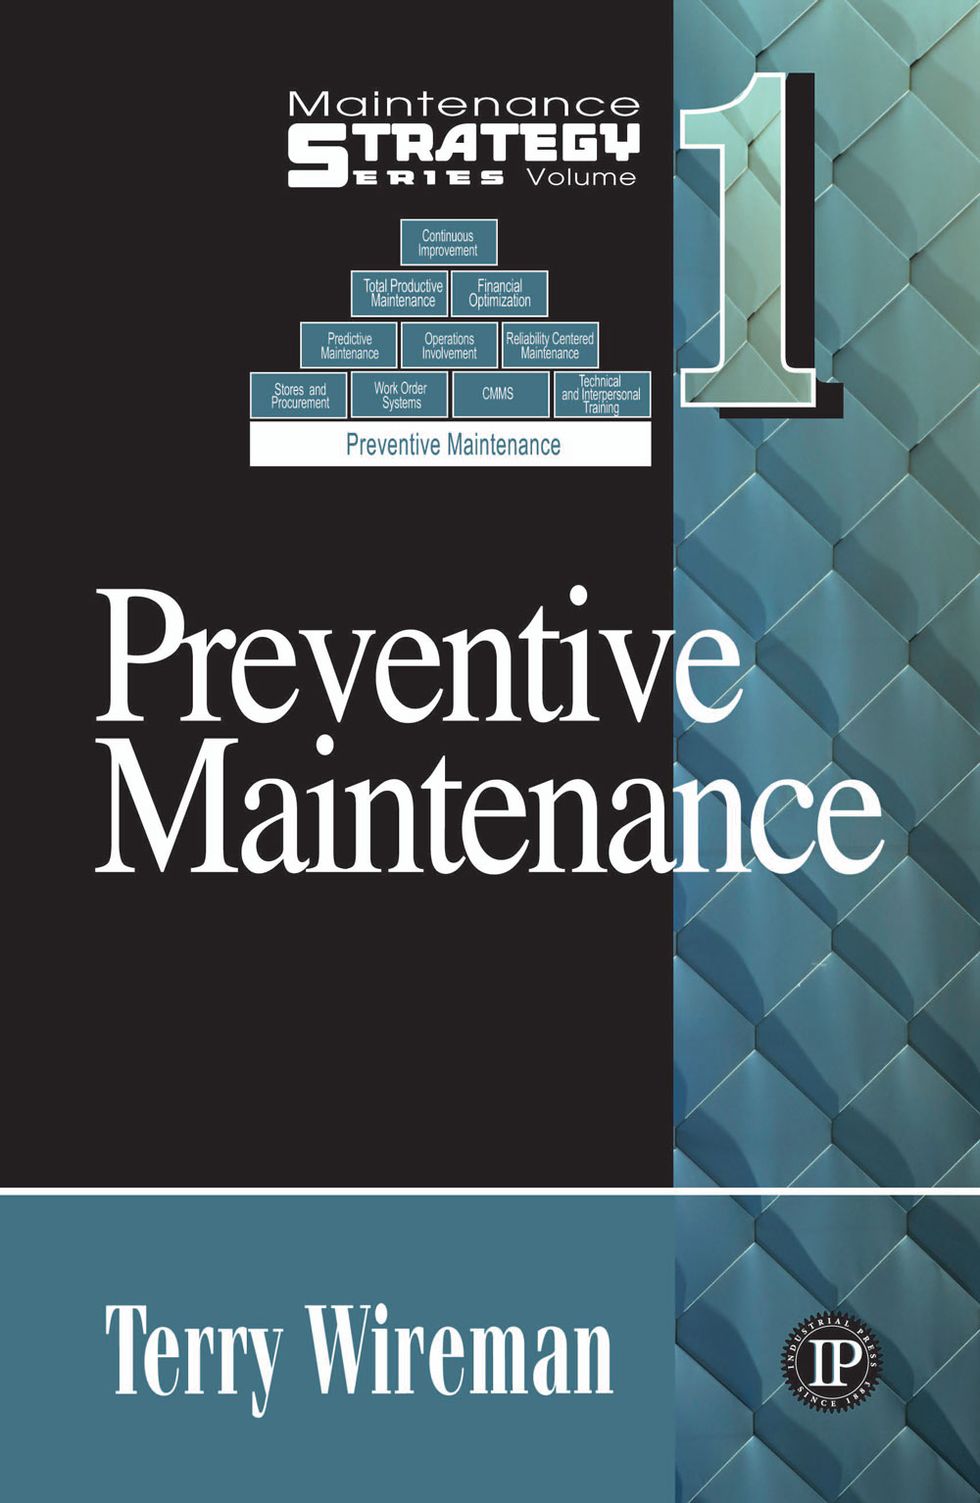  Maintenance Strategy Series Volume 1 - Preventive Maintenance 